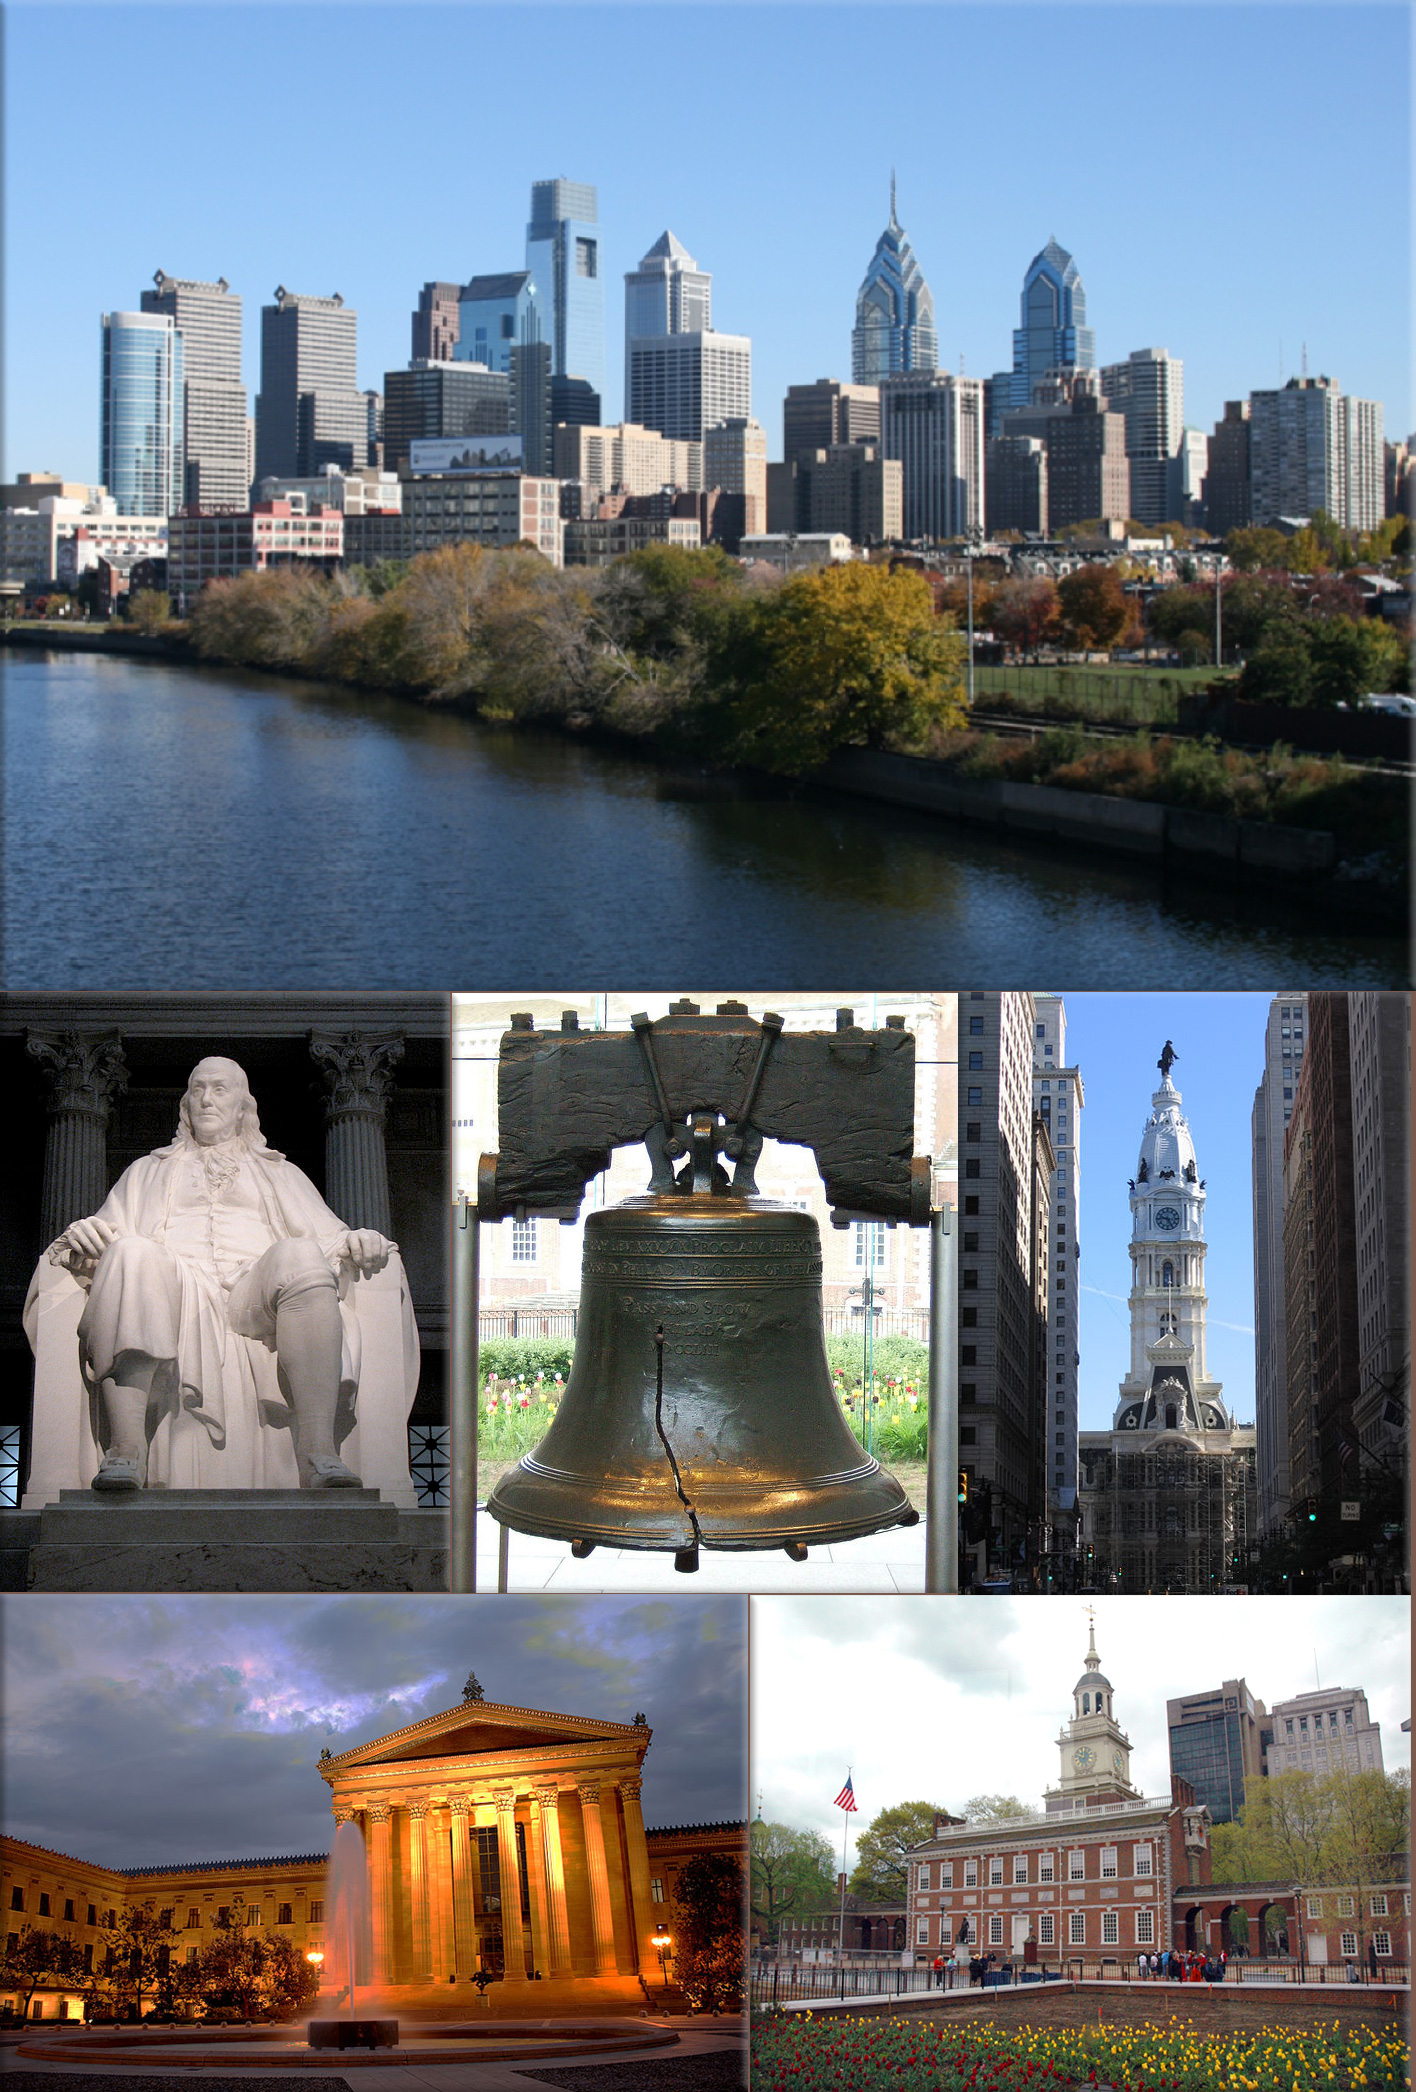 Philadelphia, Pennsylvania is founded